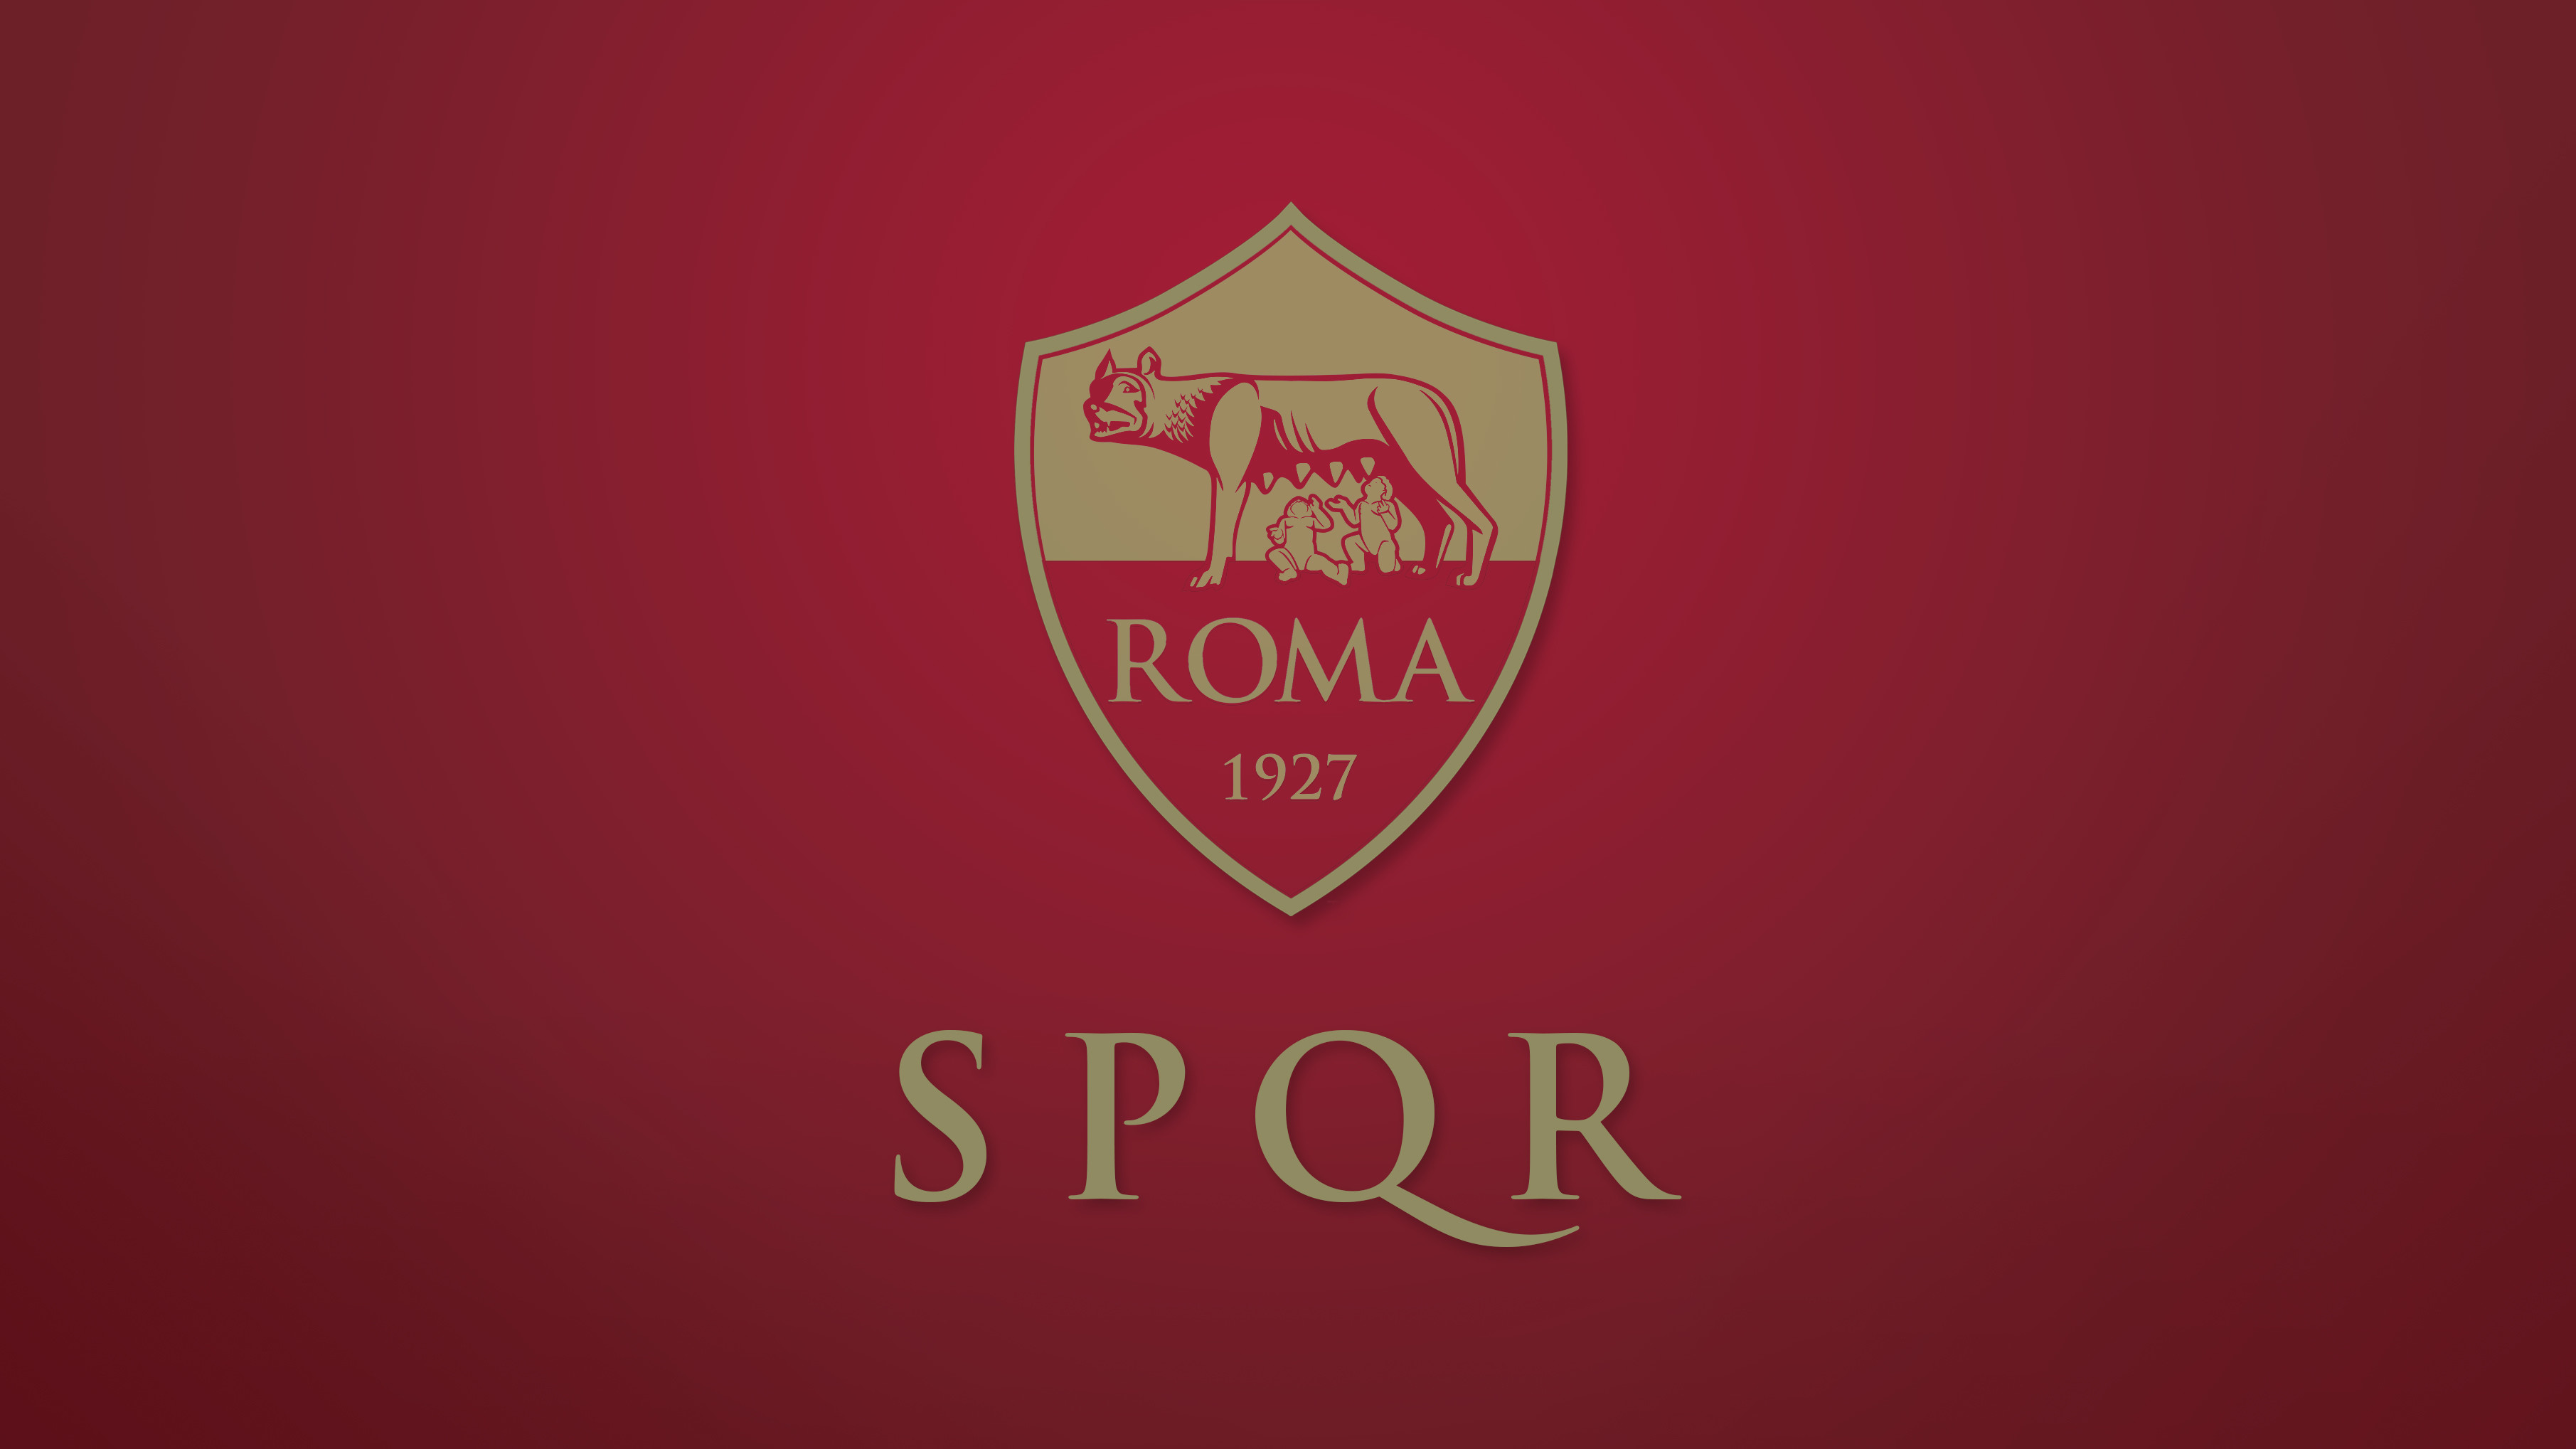 General 3622x2037 AS Roma ASR logo red gold SPQR wolf Nike Corropolese Piscioruggine Riommammerda soccer clubs Italian